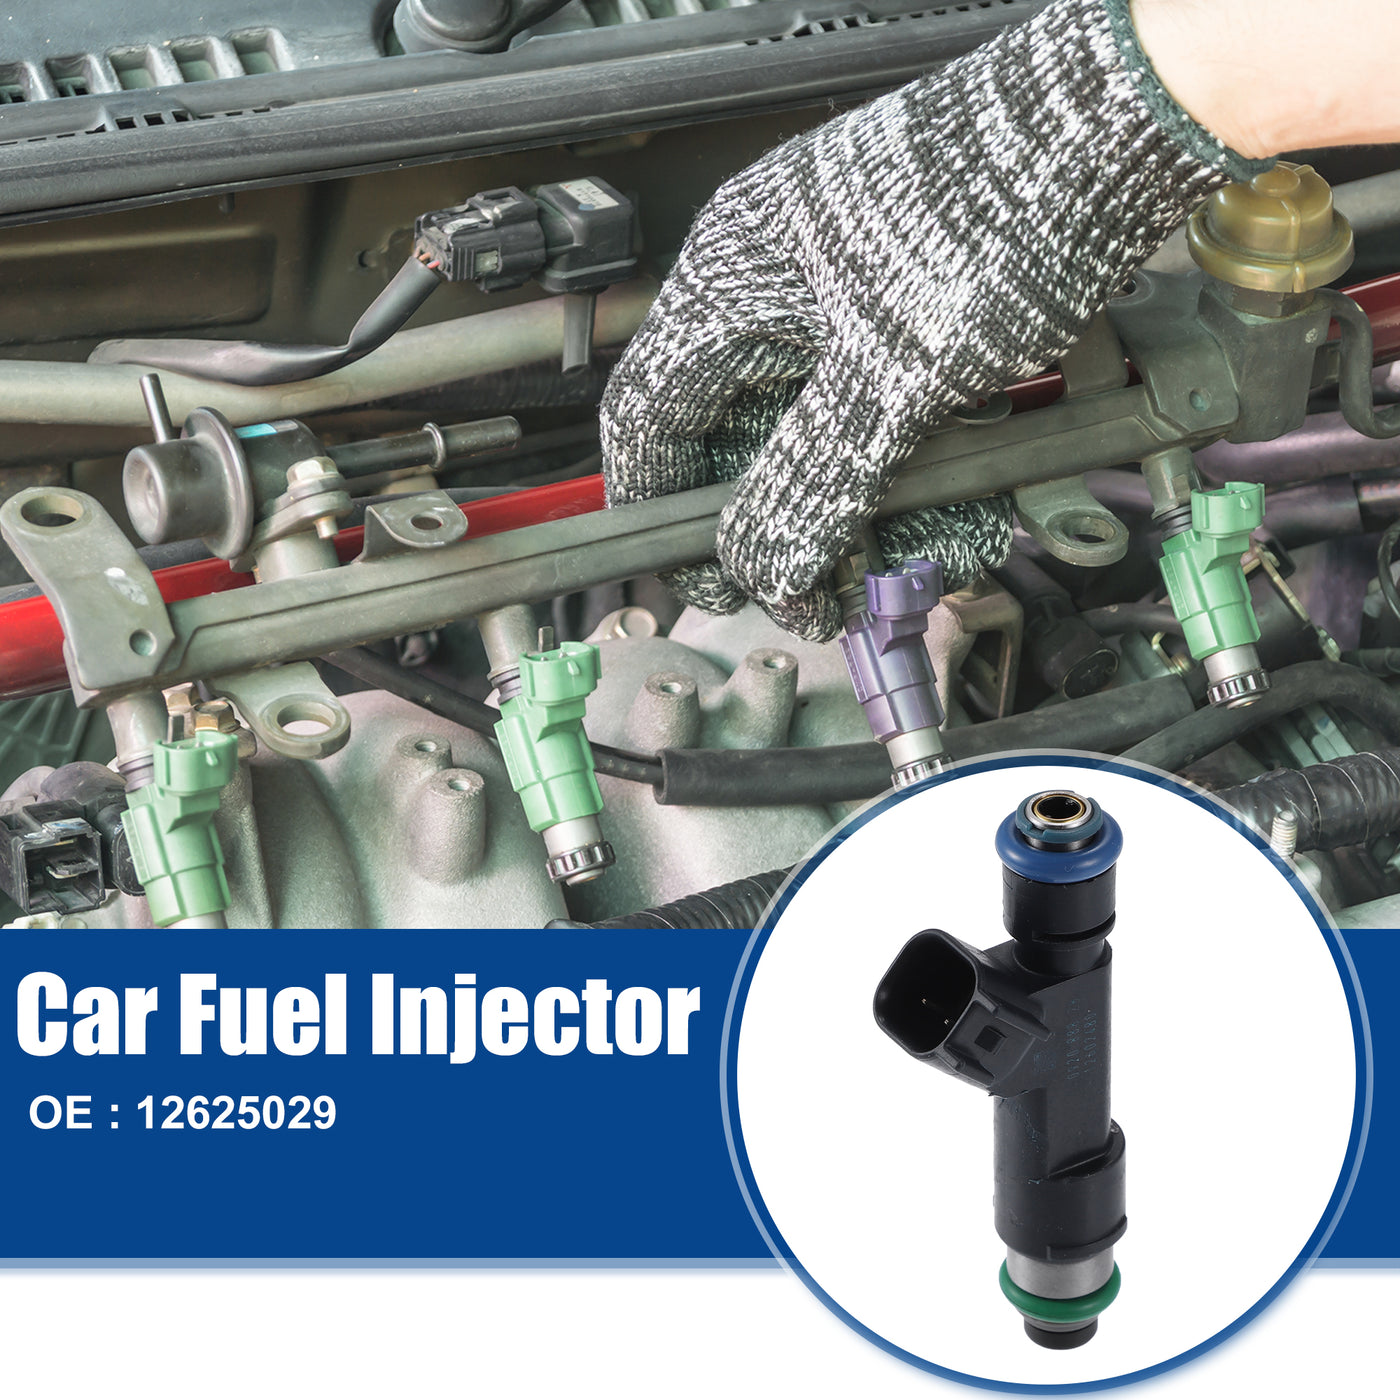 ACROPIX Car Fuel Injector Nozzle Replacement for Chevrolet Malibu Hybrid, LS, LT, LTZ 2.4L 2008-2012 No.12625029 - Pack of 4